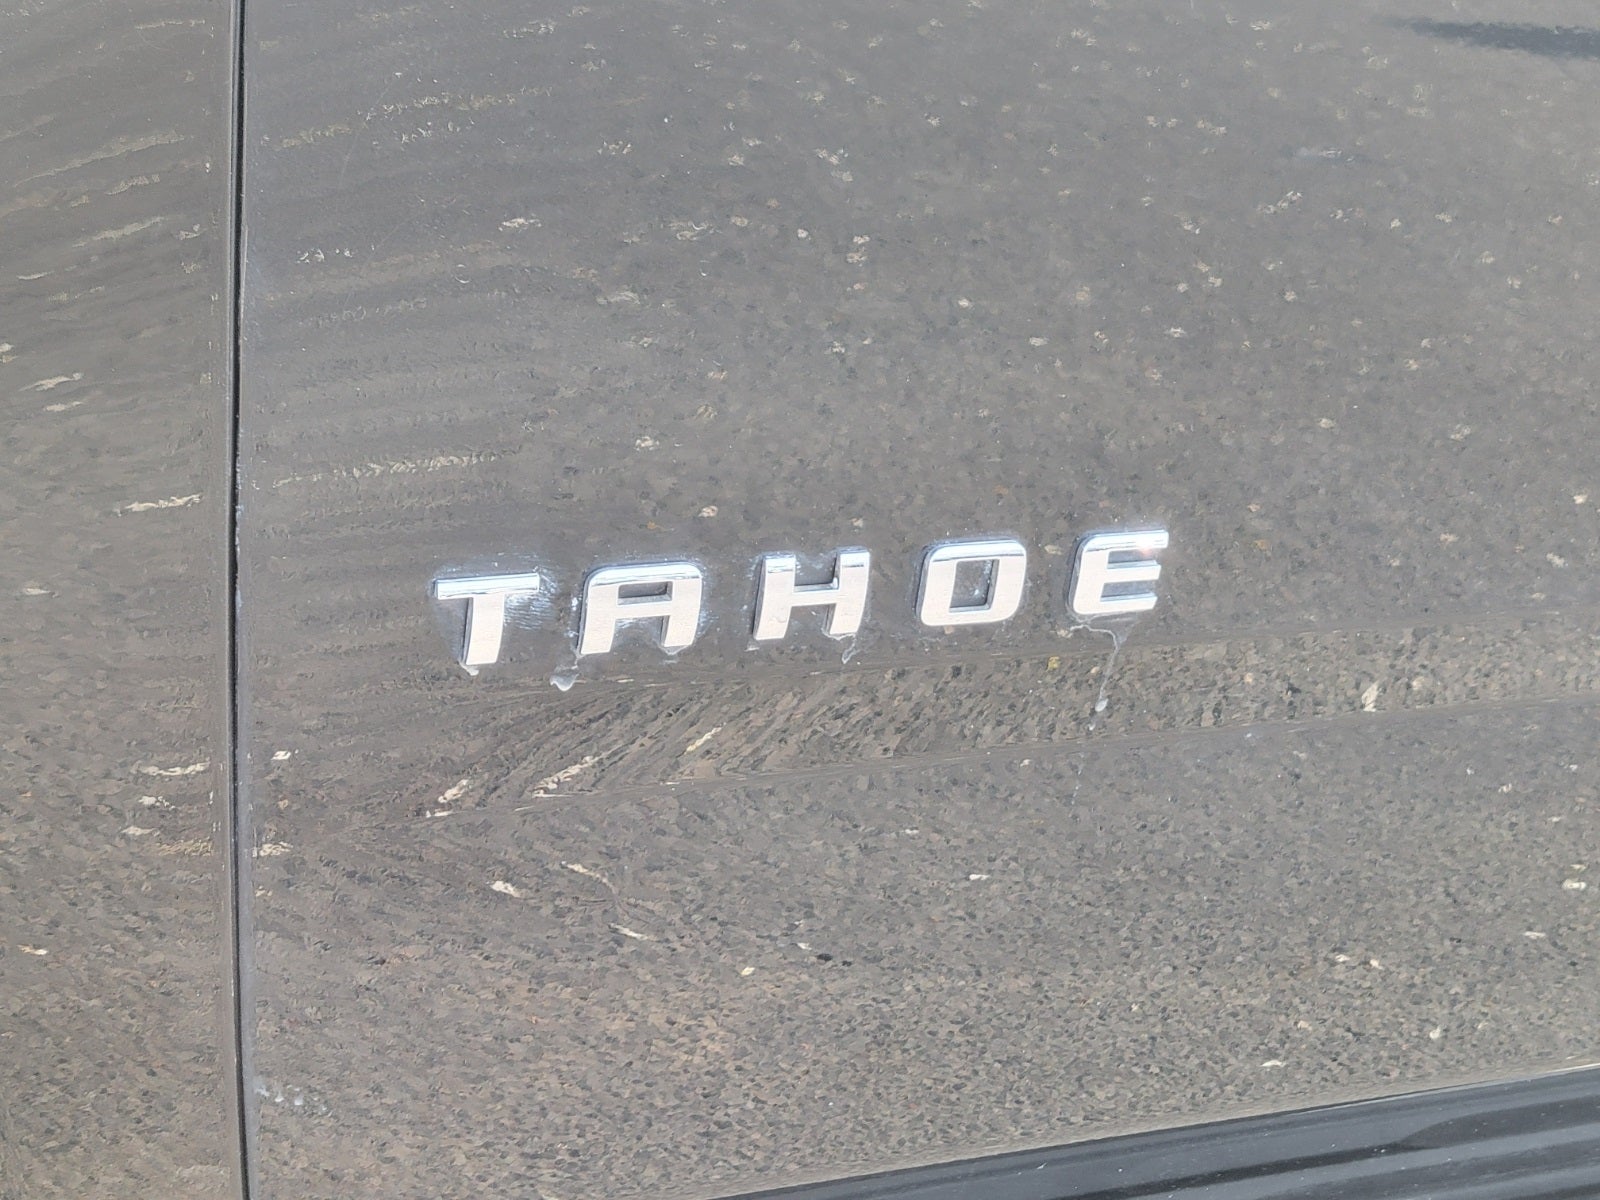 2017 Chevrolet Tahoe LT